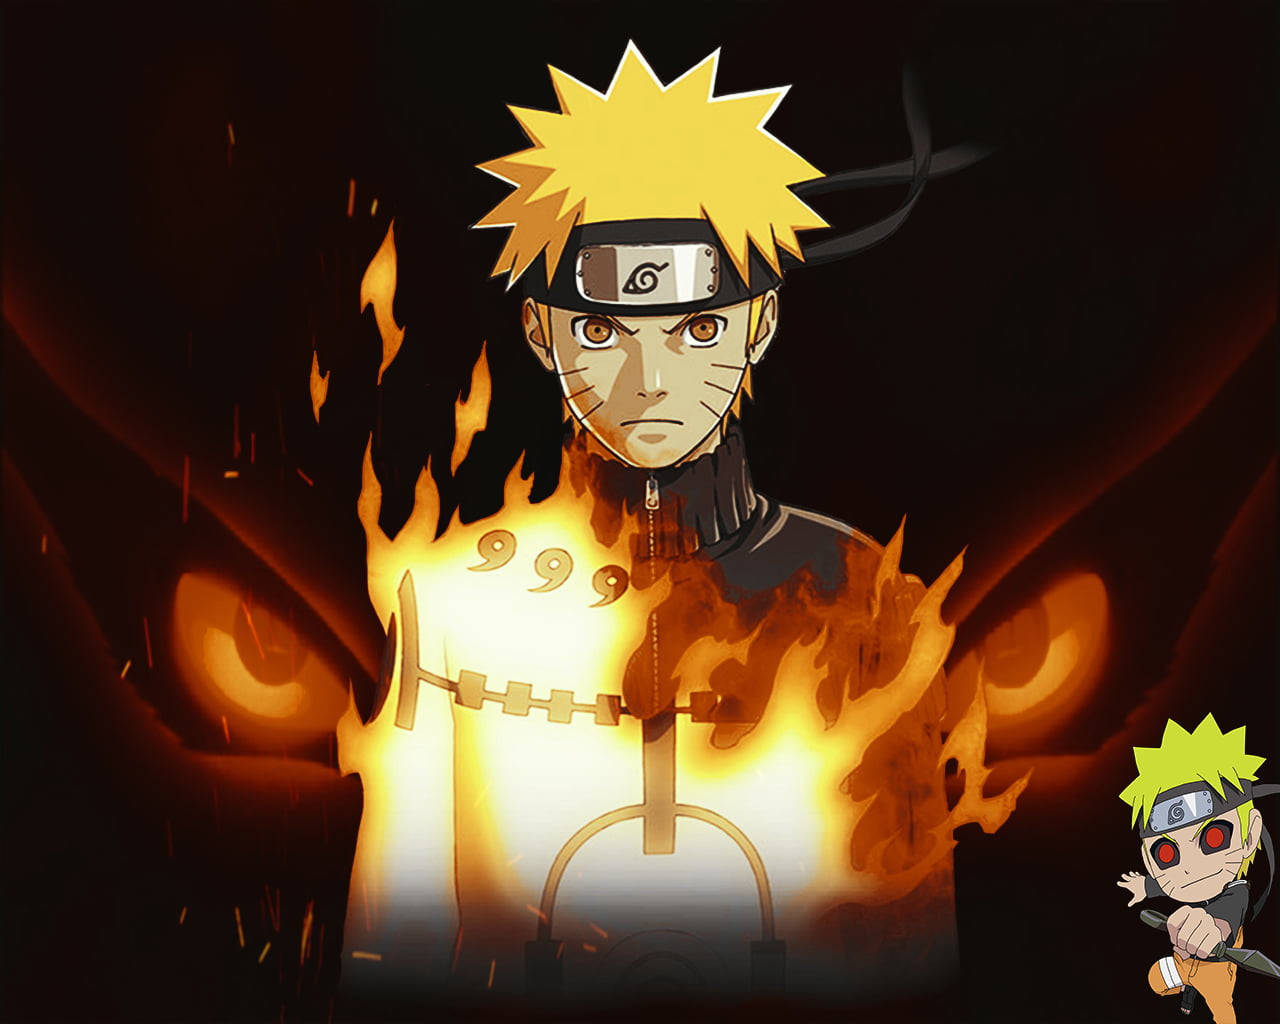 Moving Naruto Fiery Dark Art